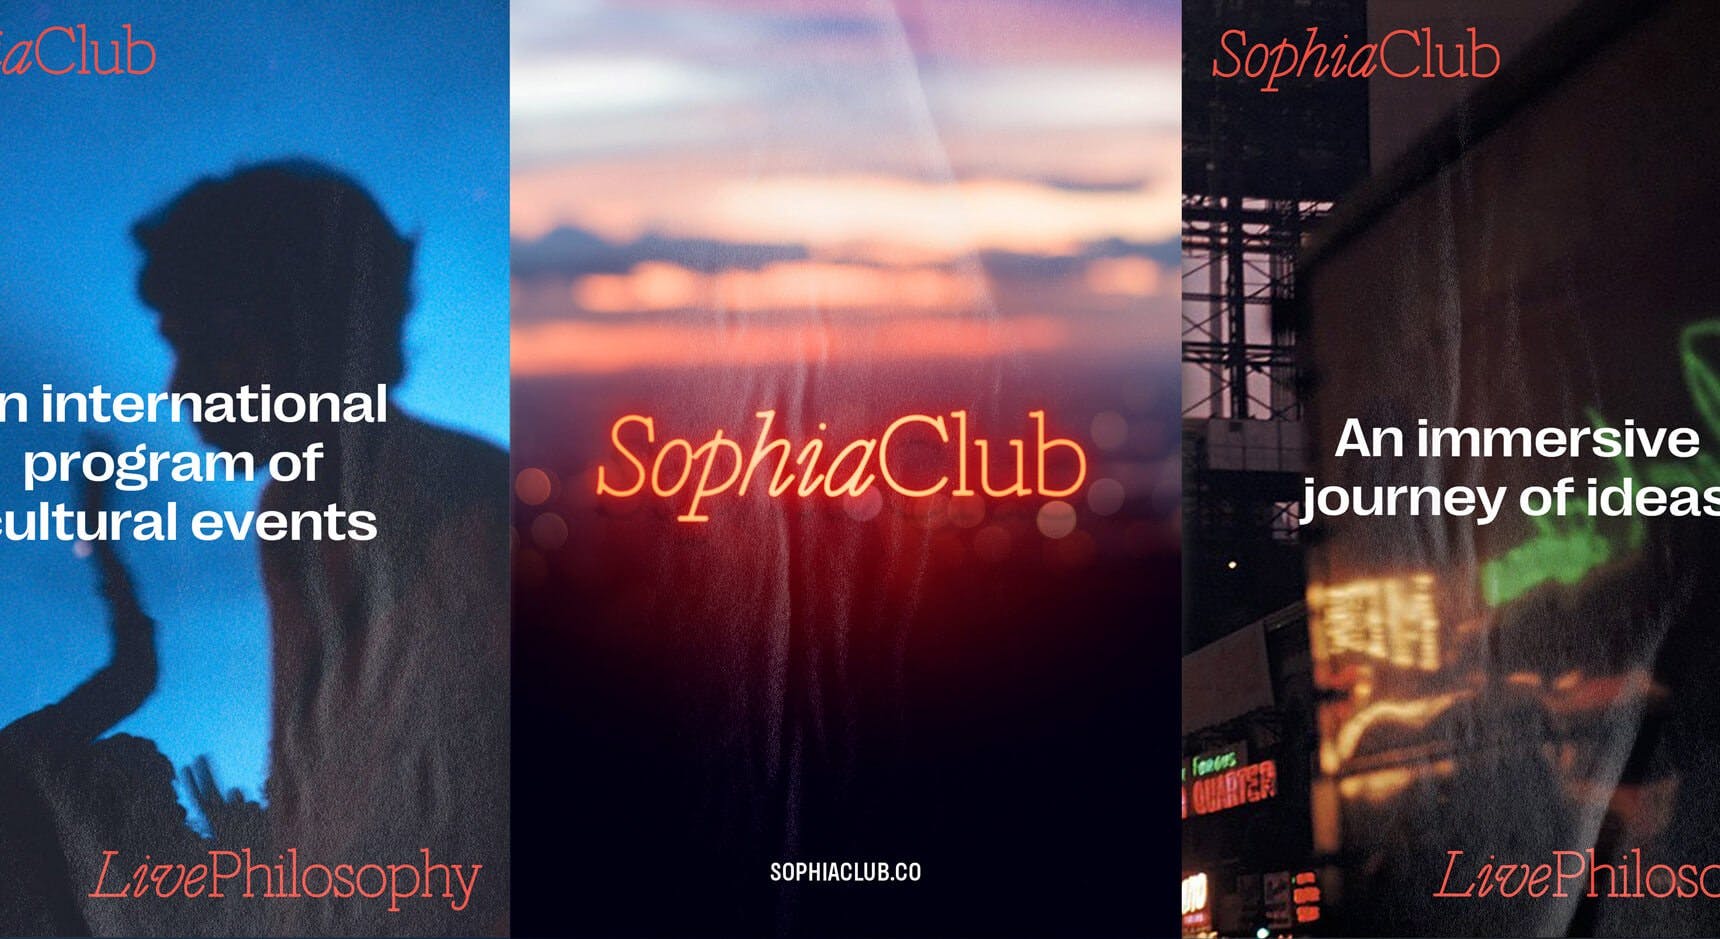 Sophia Club Paste Up Posters